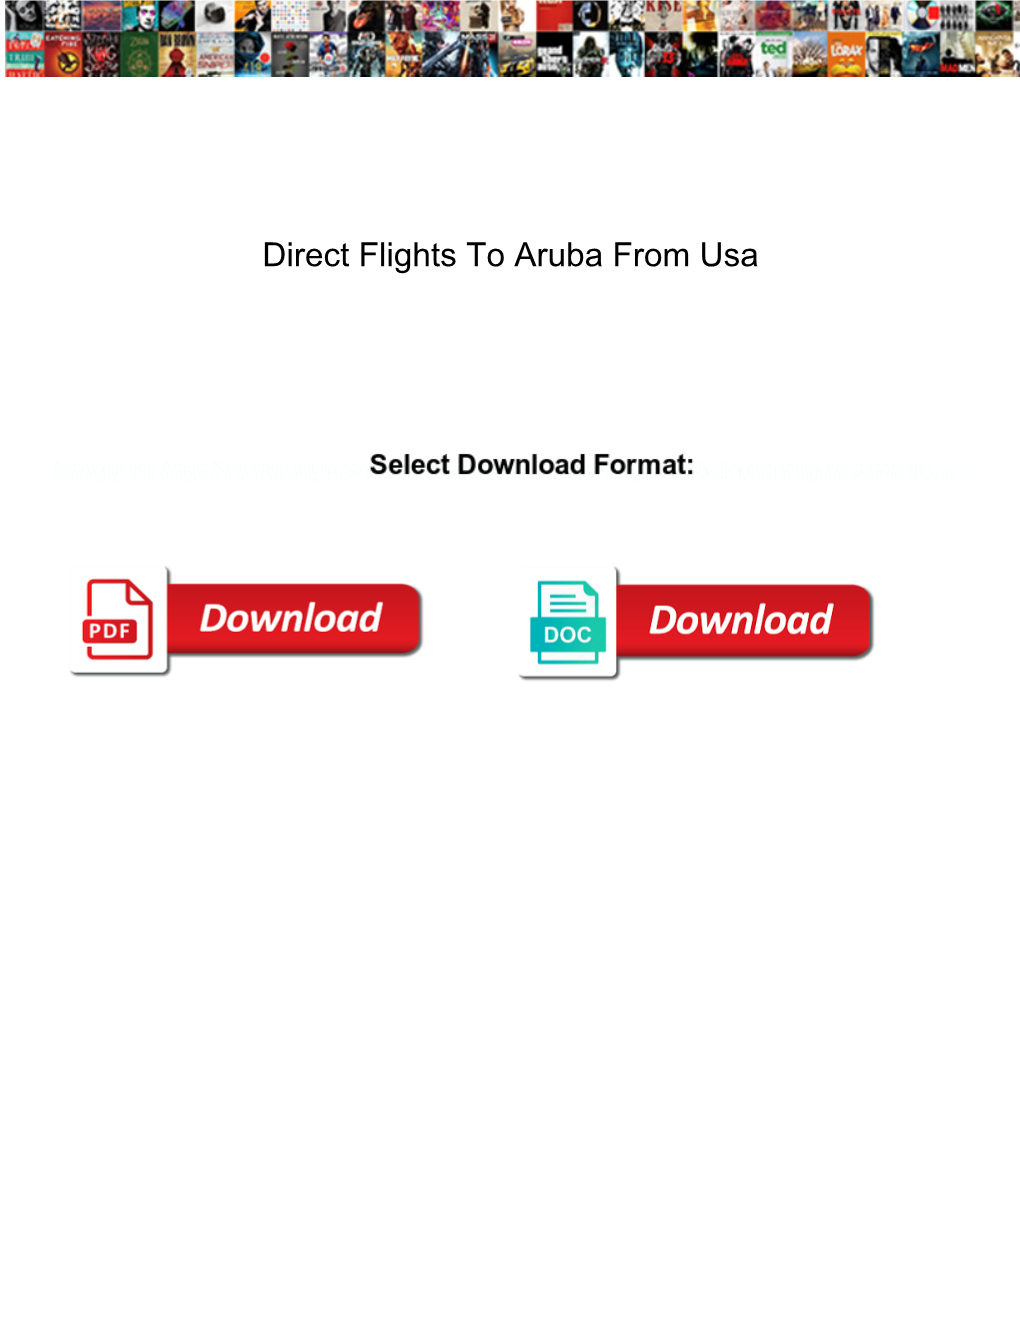 Direct Flights to Aruba from Usa Viva